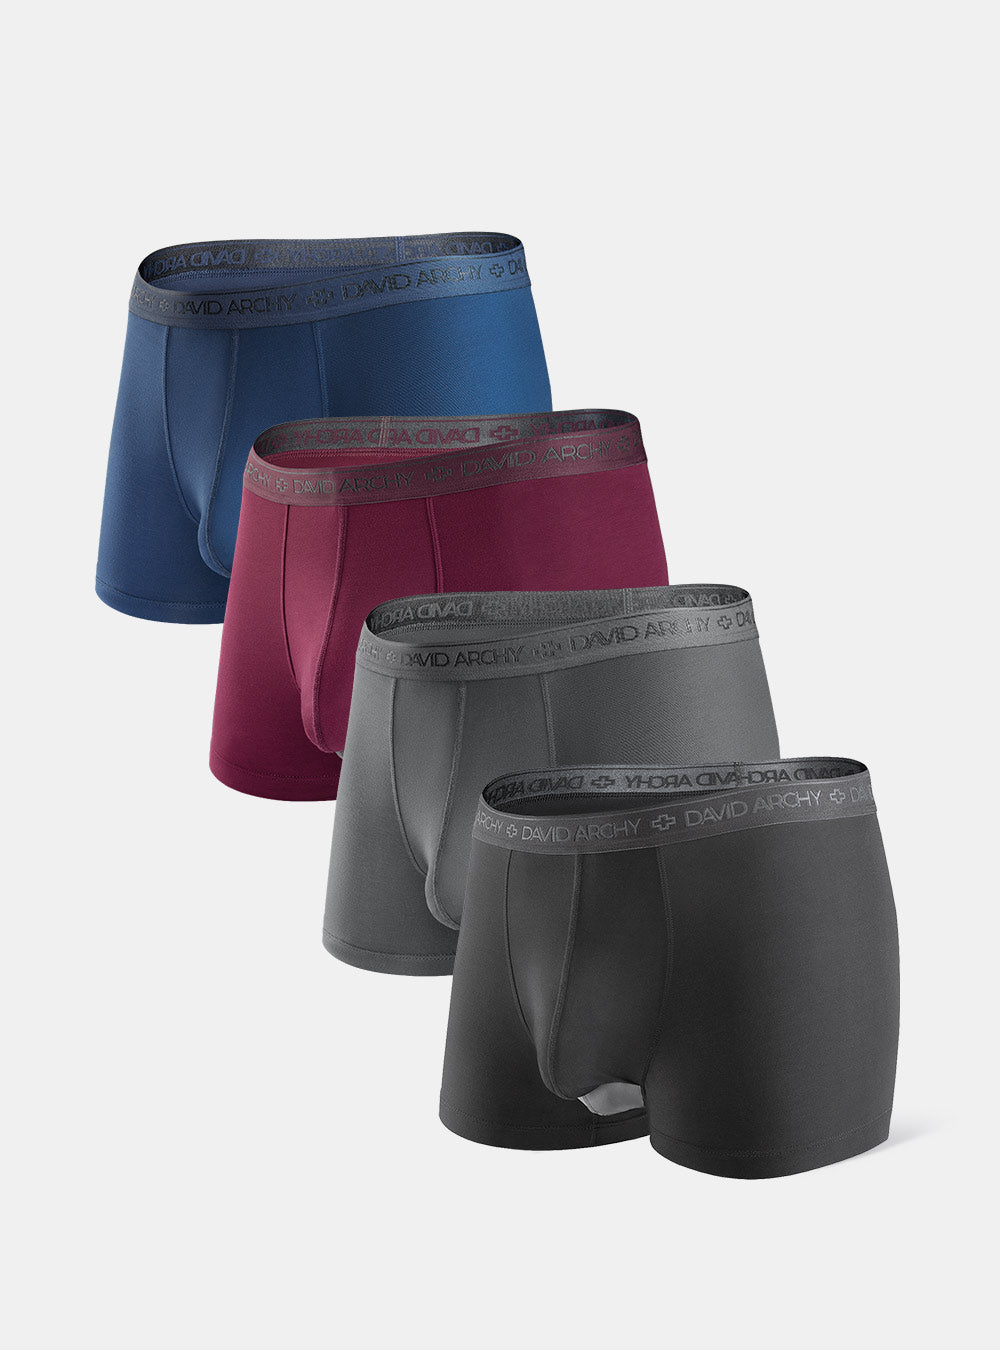 David Archy 4 Packs Trunks Separatec 3D Pouch Micro Modal Dual Pouch  Separatec Underwear